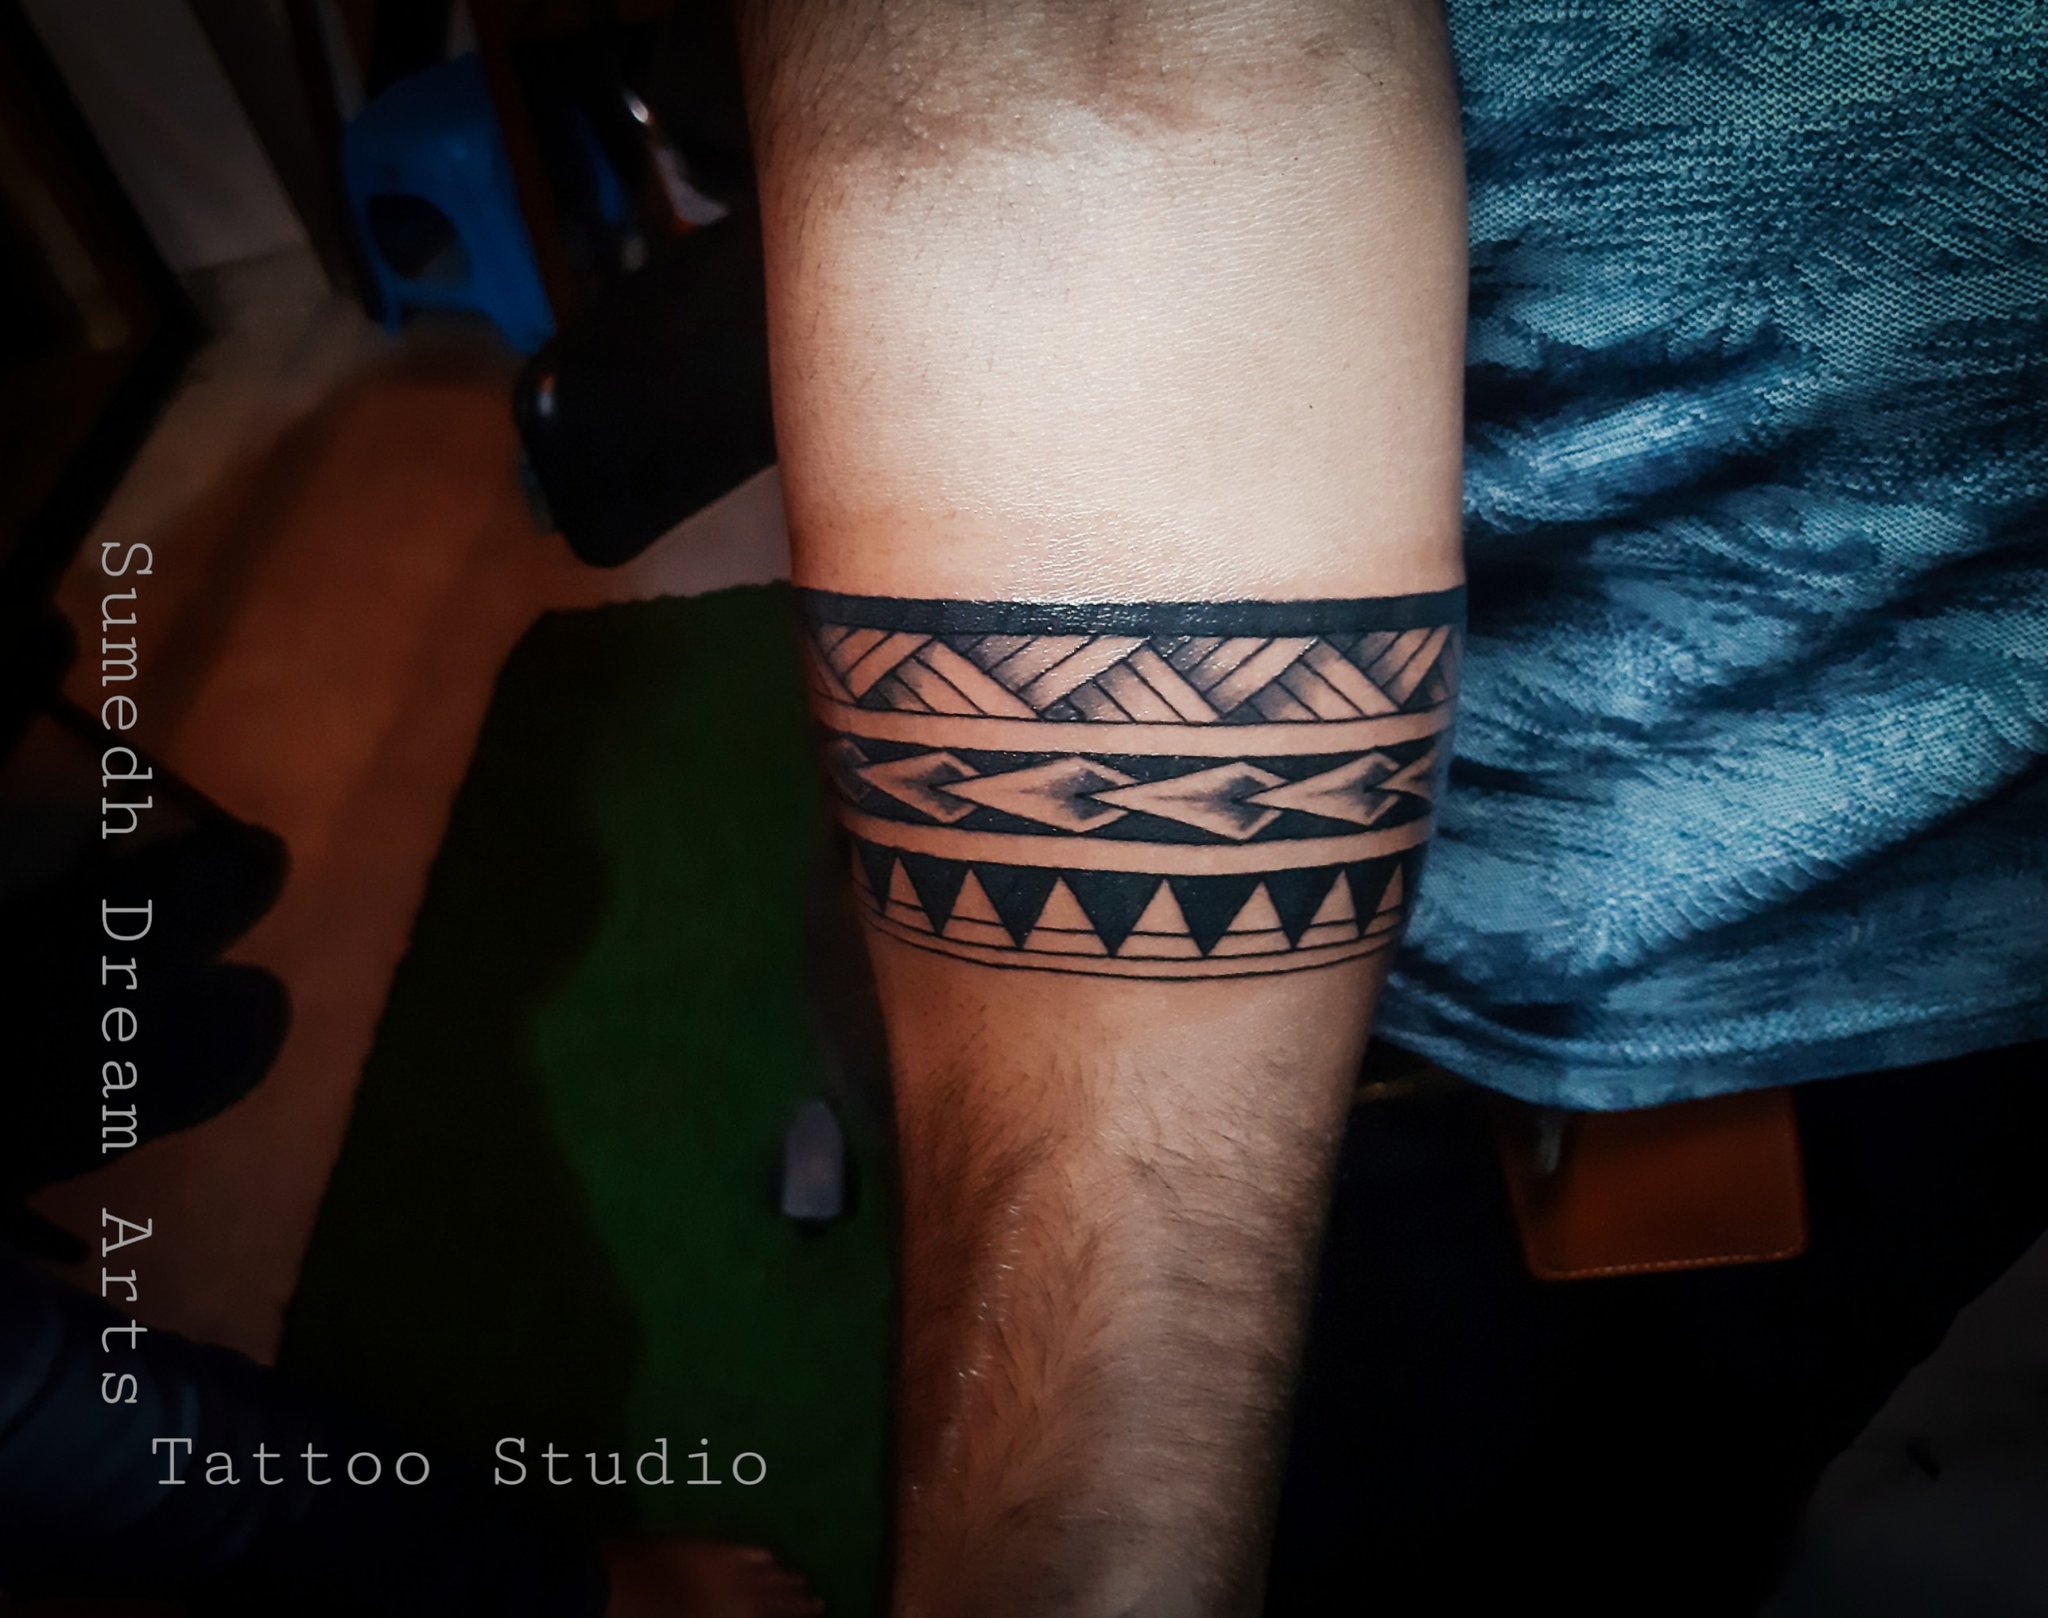 Tattoo uploaded by Vipul Chaudhary • Band tattoo |Band tattoo design |Band  tattoo ideas • Tattoodo